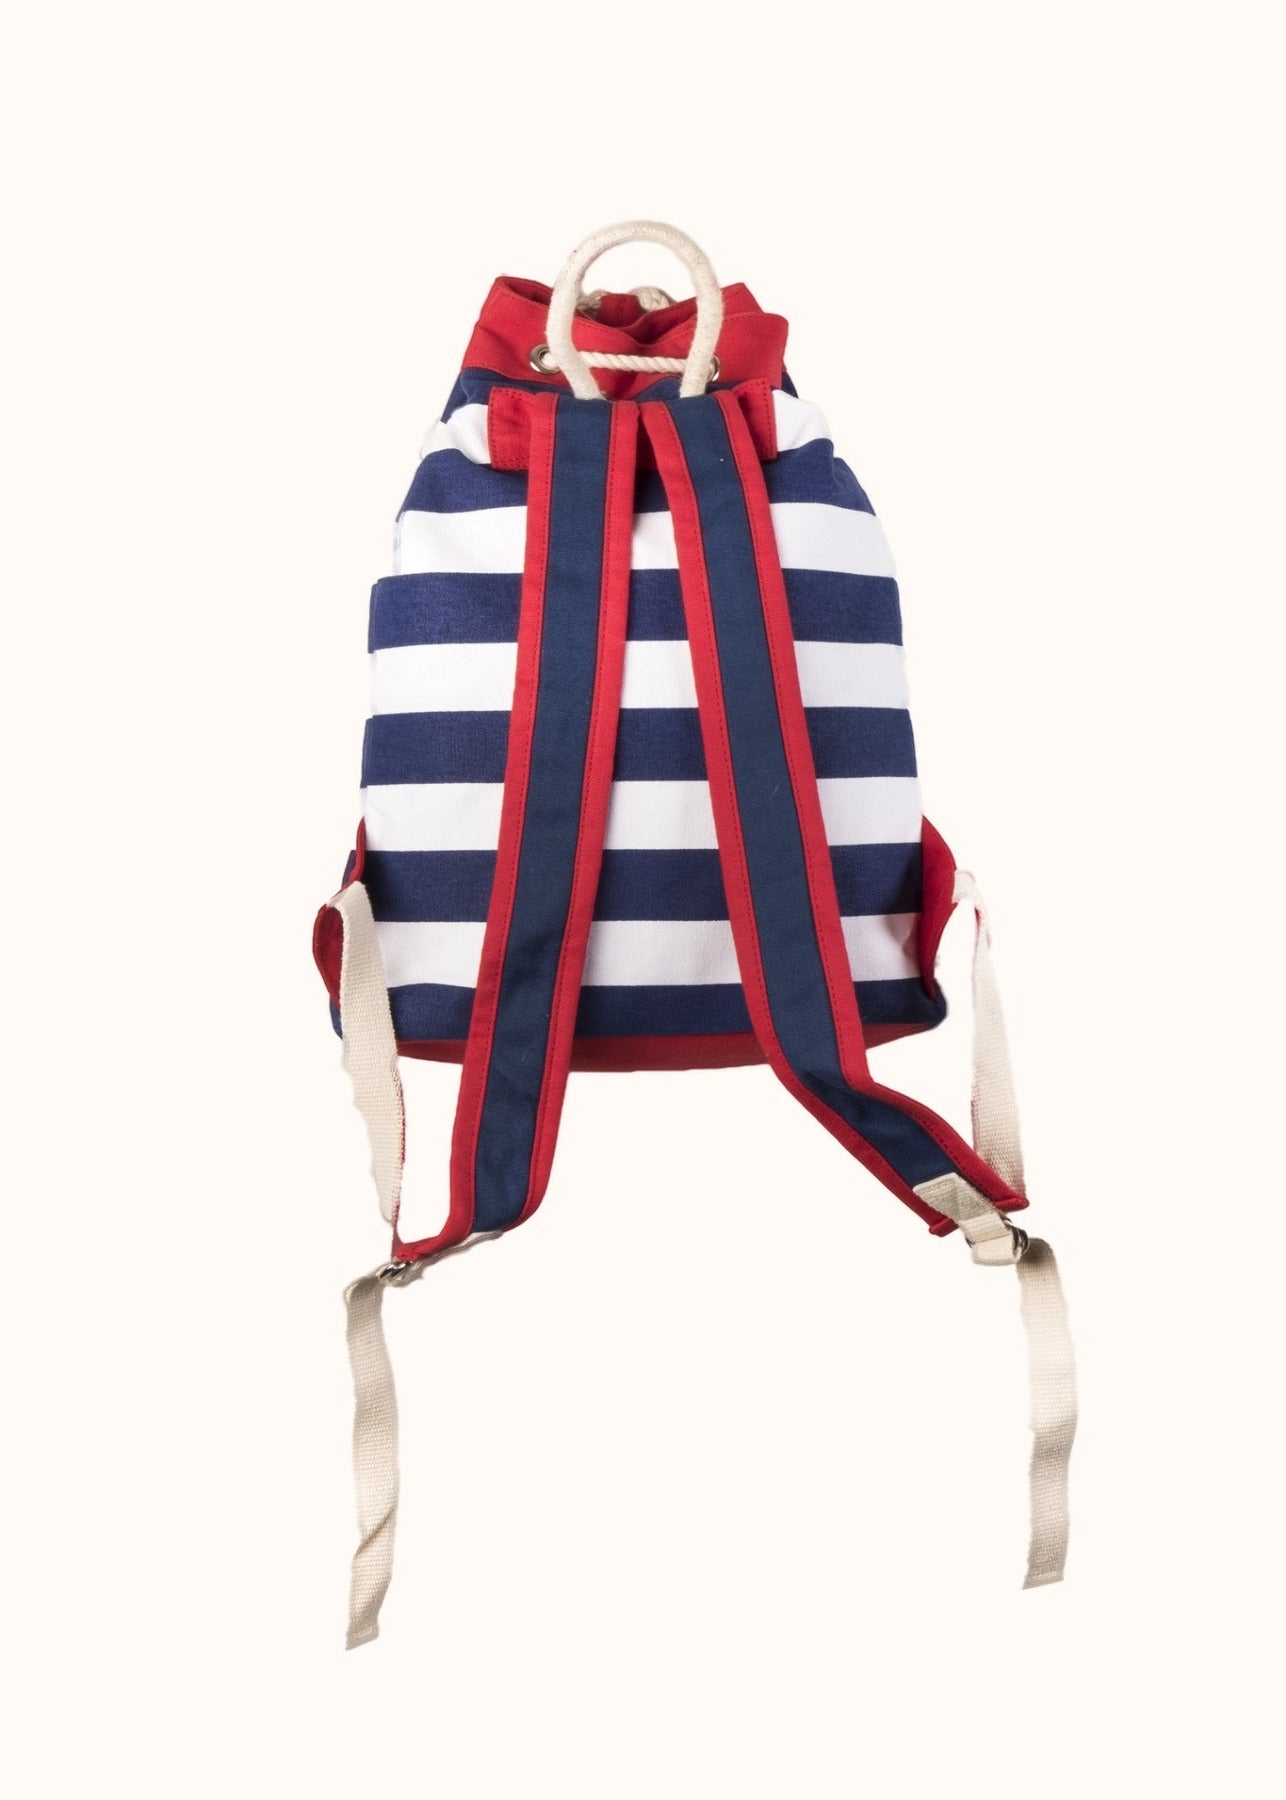  ODAWA Blue Sea Anchor Nautical Leash Backpack